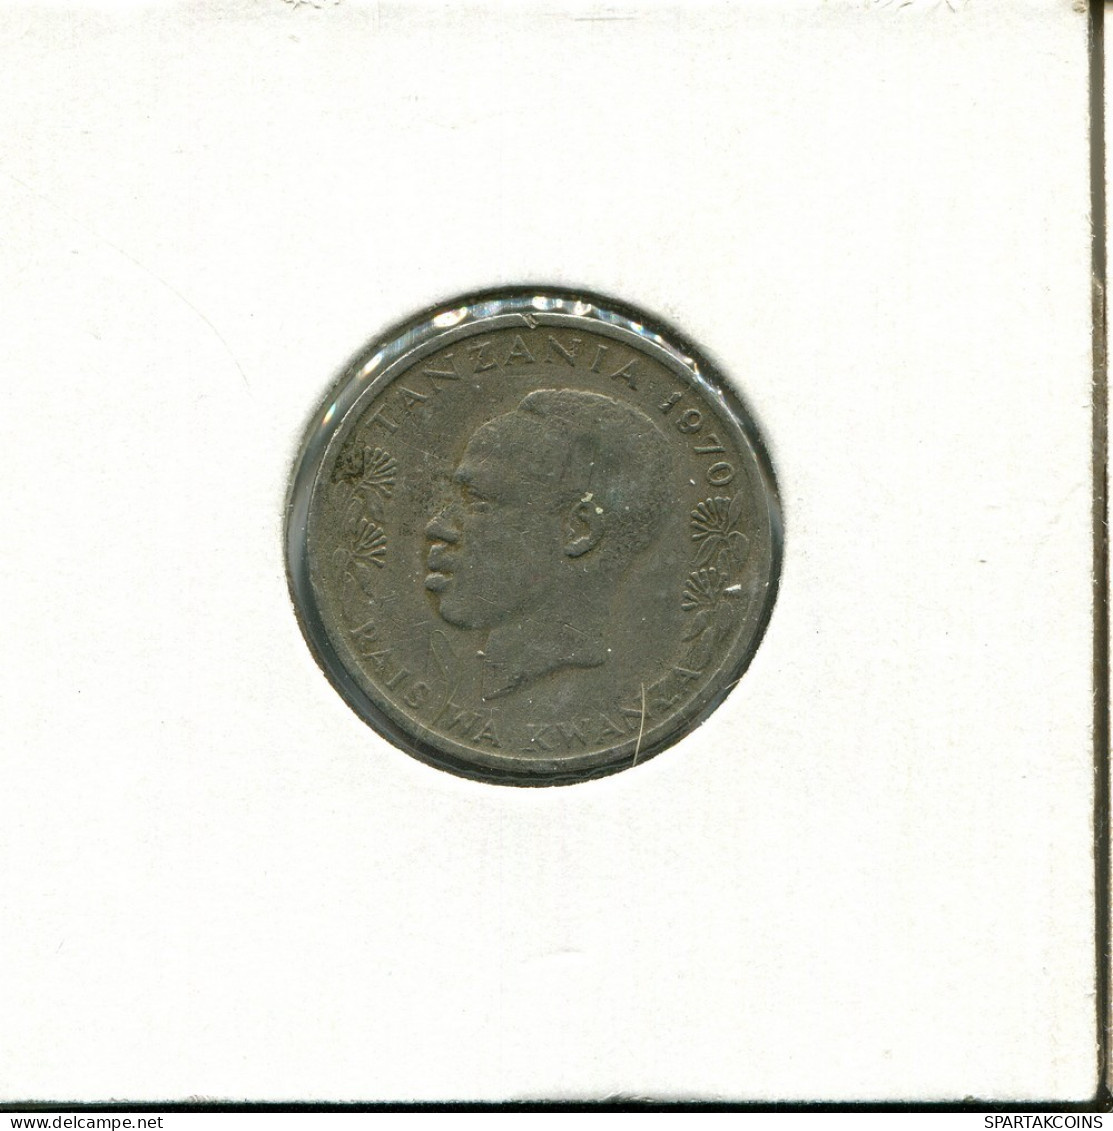 50 SENTI 1970 TANZANIA Coin #AT972.U.A - Tansania